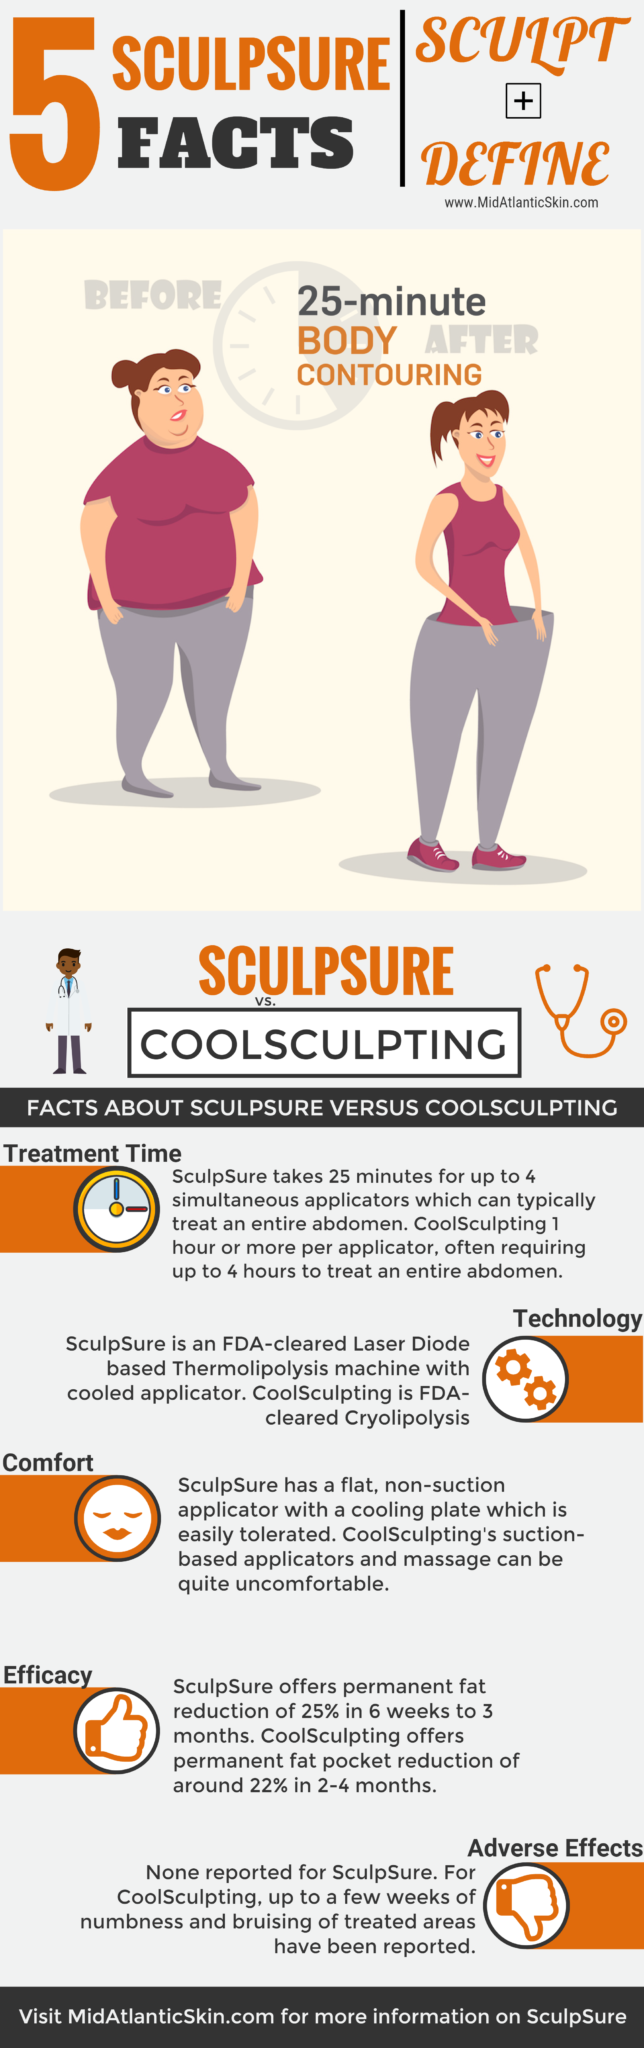 SculpSure vs CoolSculpting  Colen, Larry (norfolkplasticsurgerypc